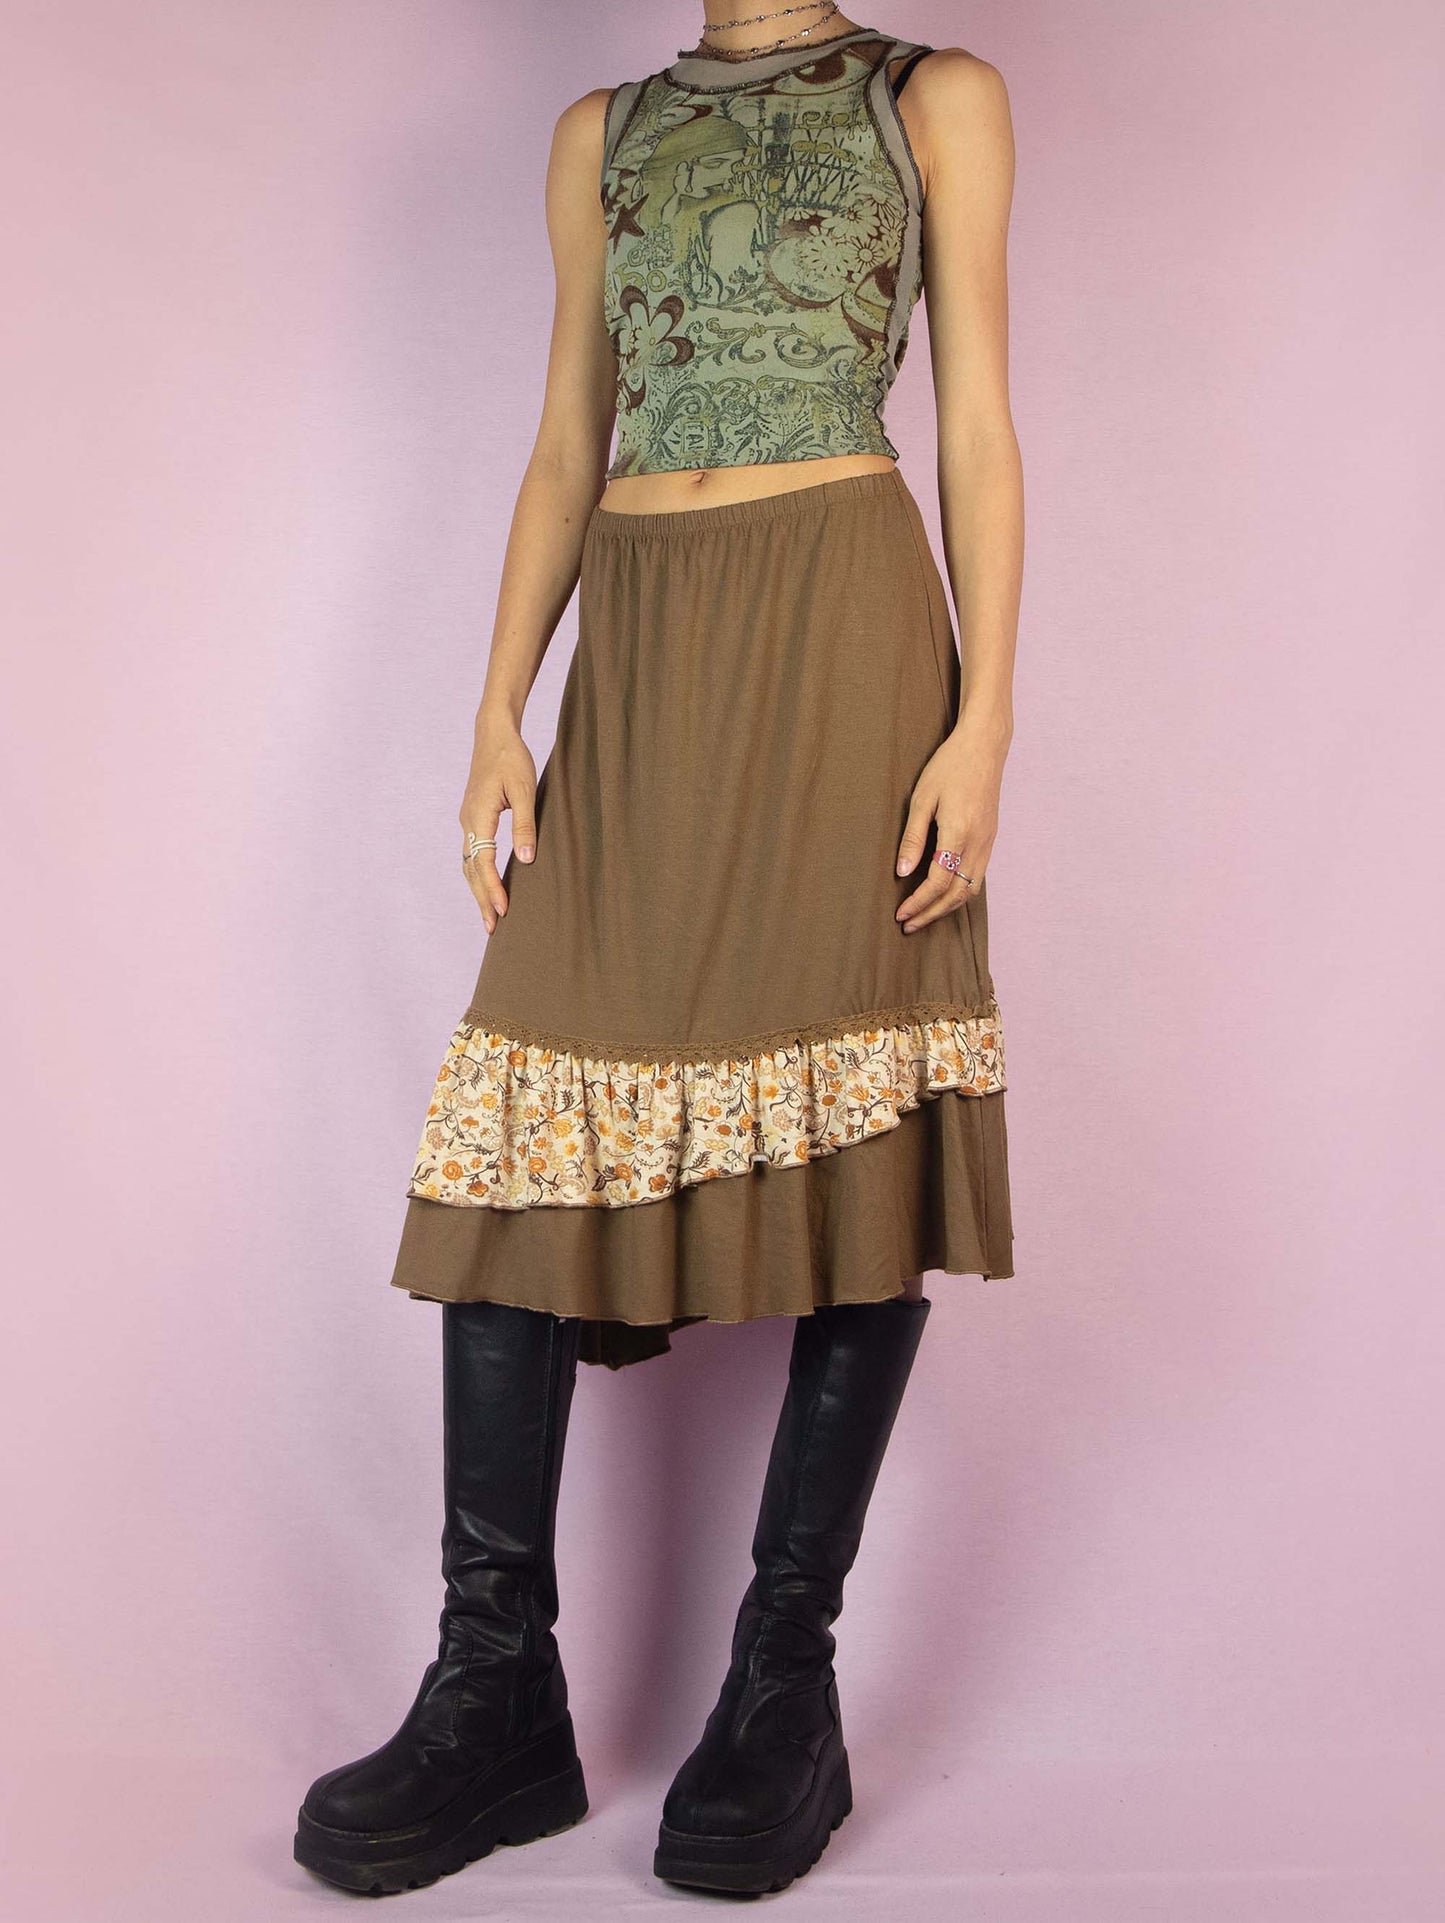 The Y2K Asymmetric Brown Midi Skirt is a vintage 2000s fairy grunge cottagecore style skirt with an asymmetric floral print ruffle hem and elastic waist.